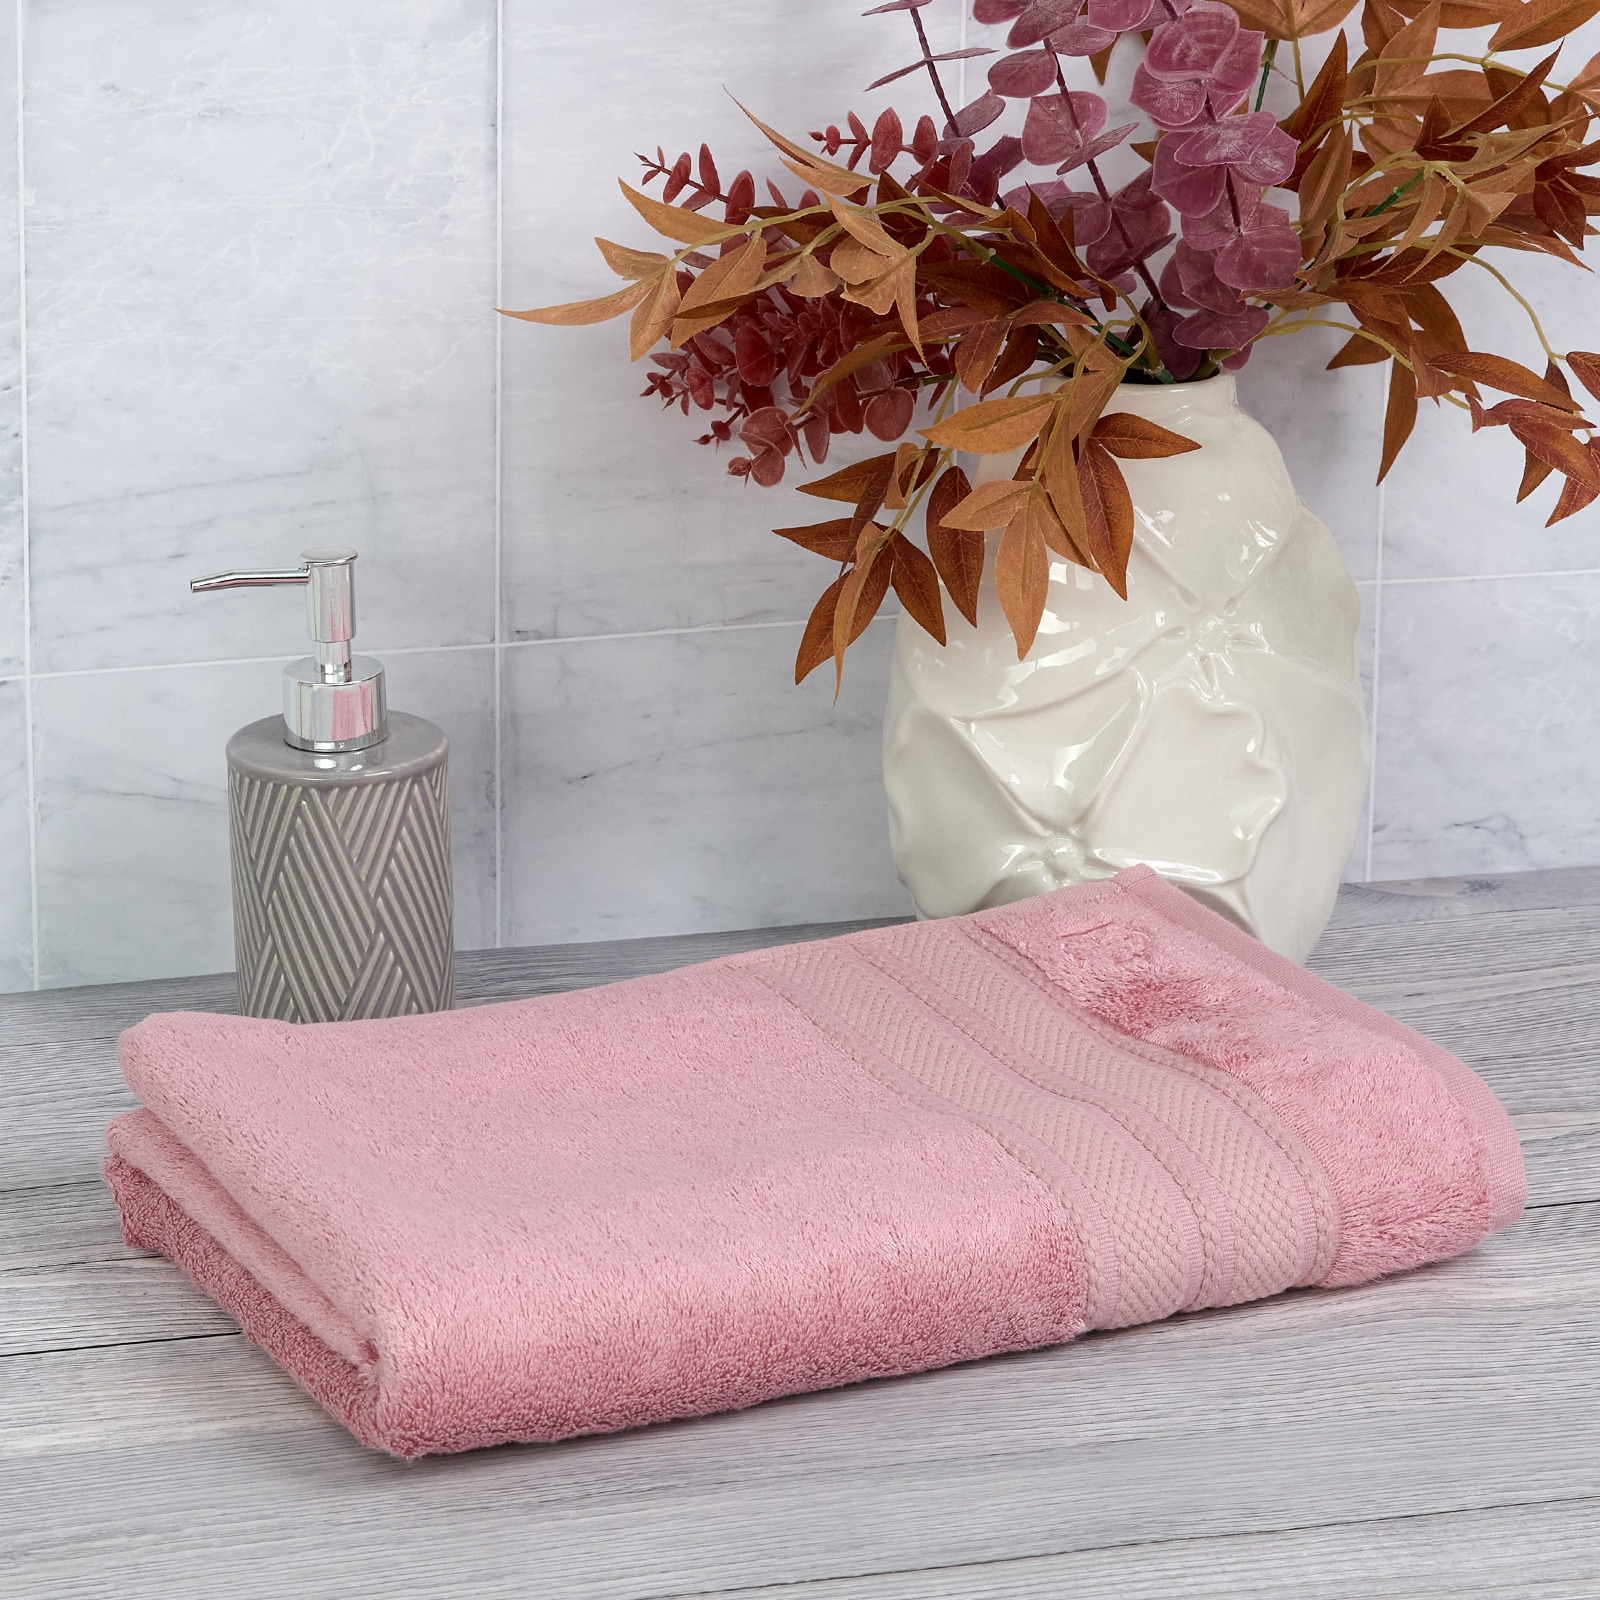 полотенце махровое cozy bamboo розовое Полотенце махровое Cozy Bamboo, розовое